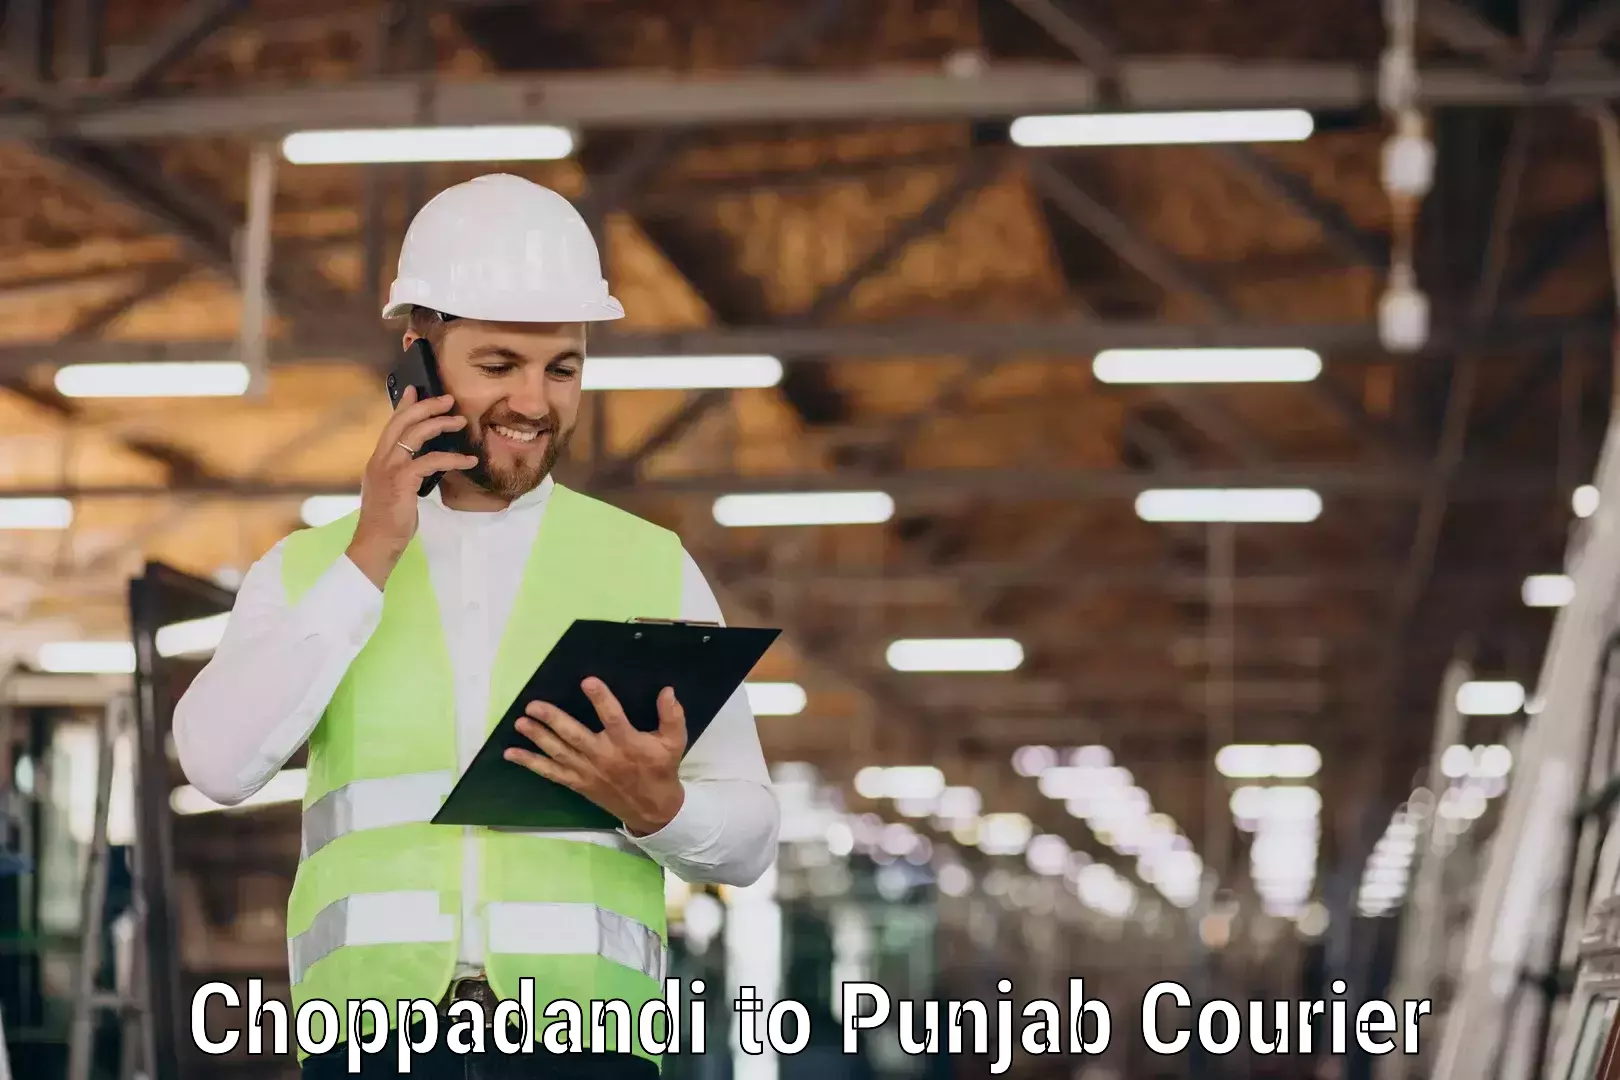 End-to-end delivery Choppadandi to Punjab